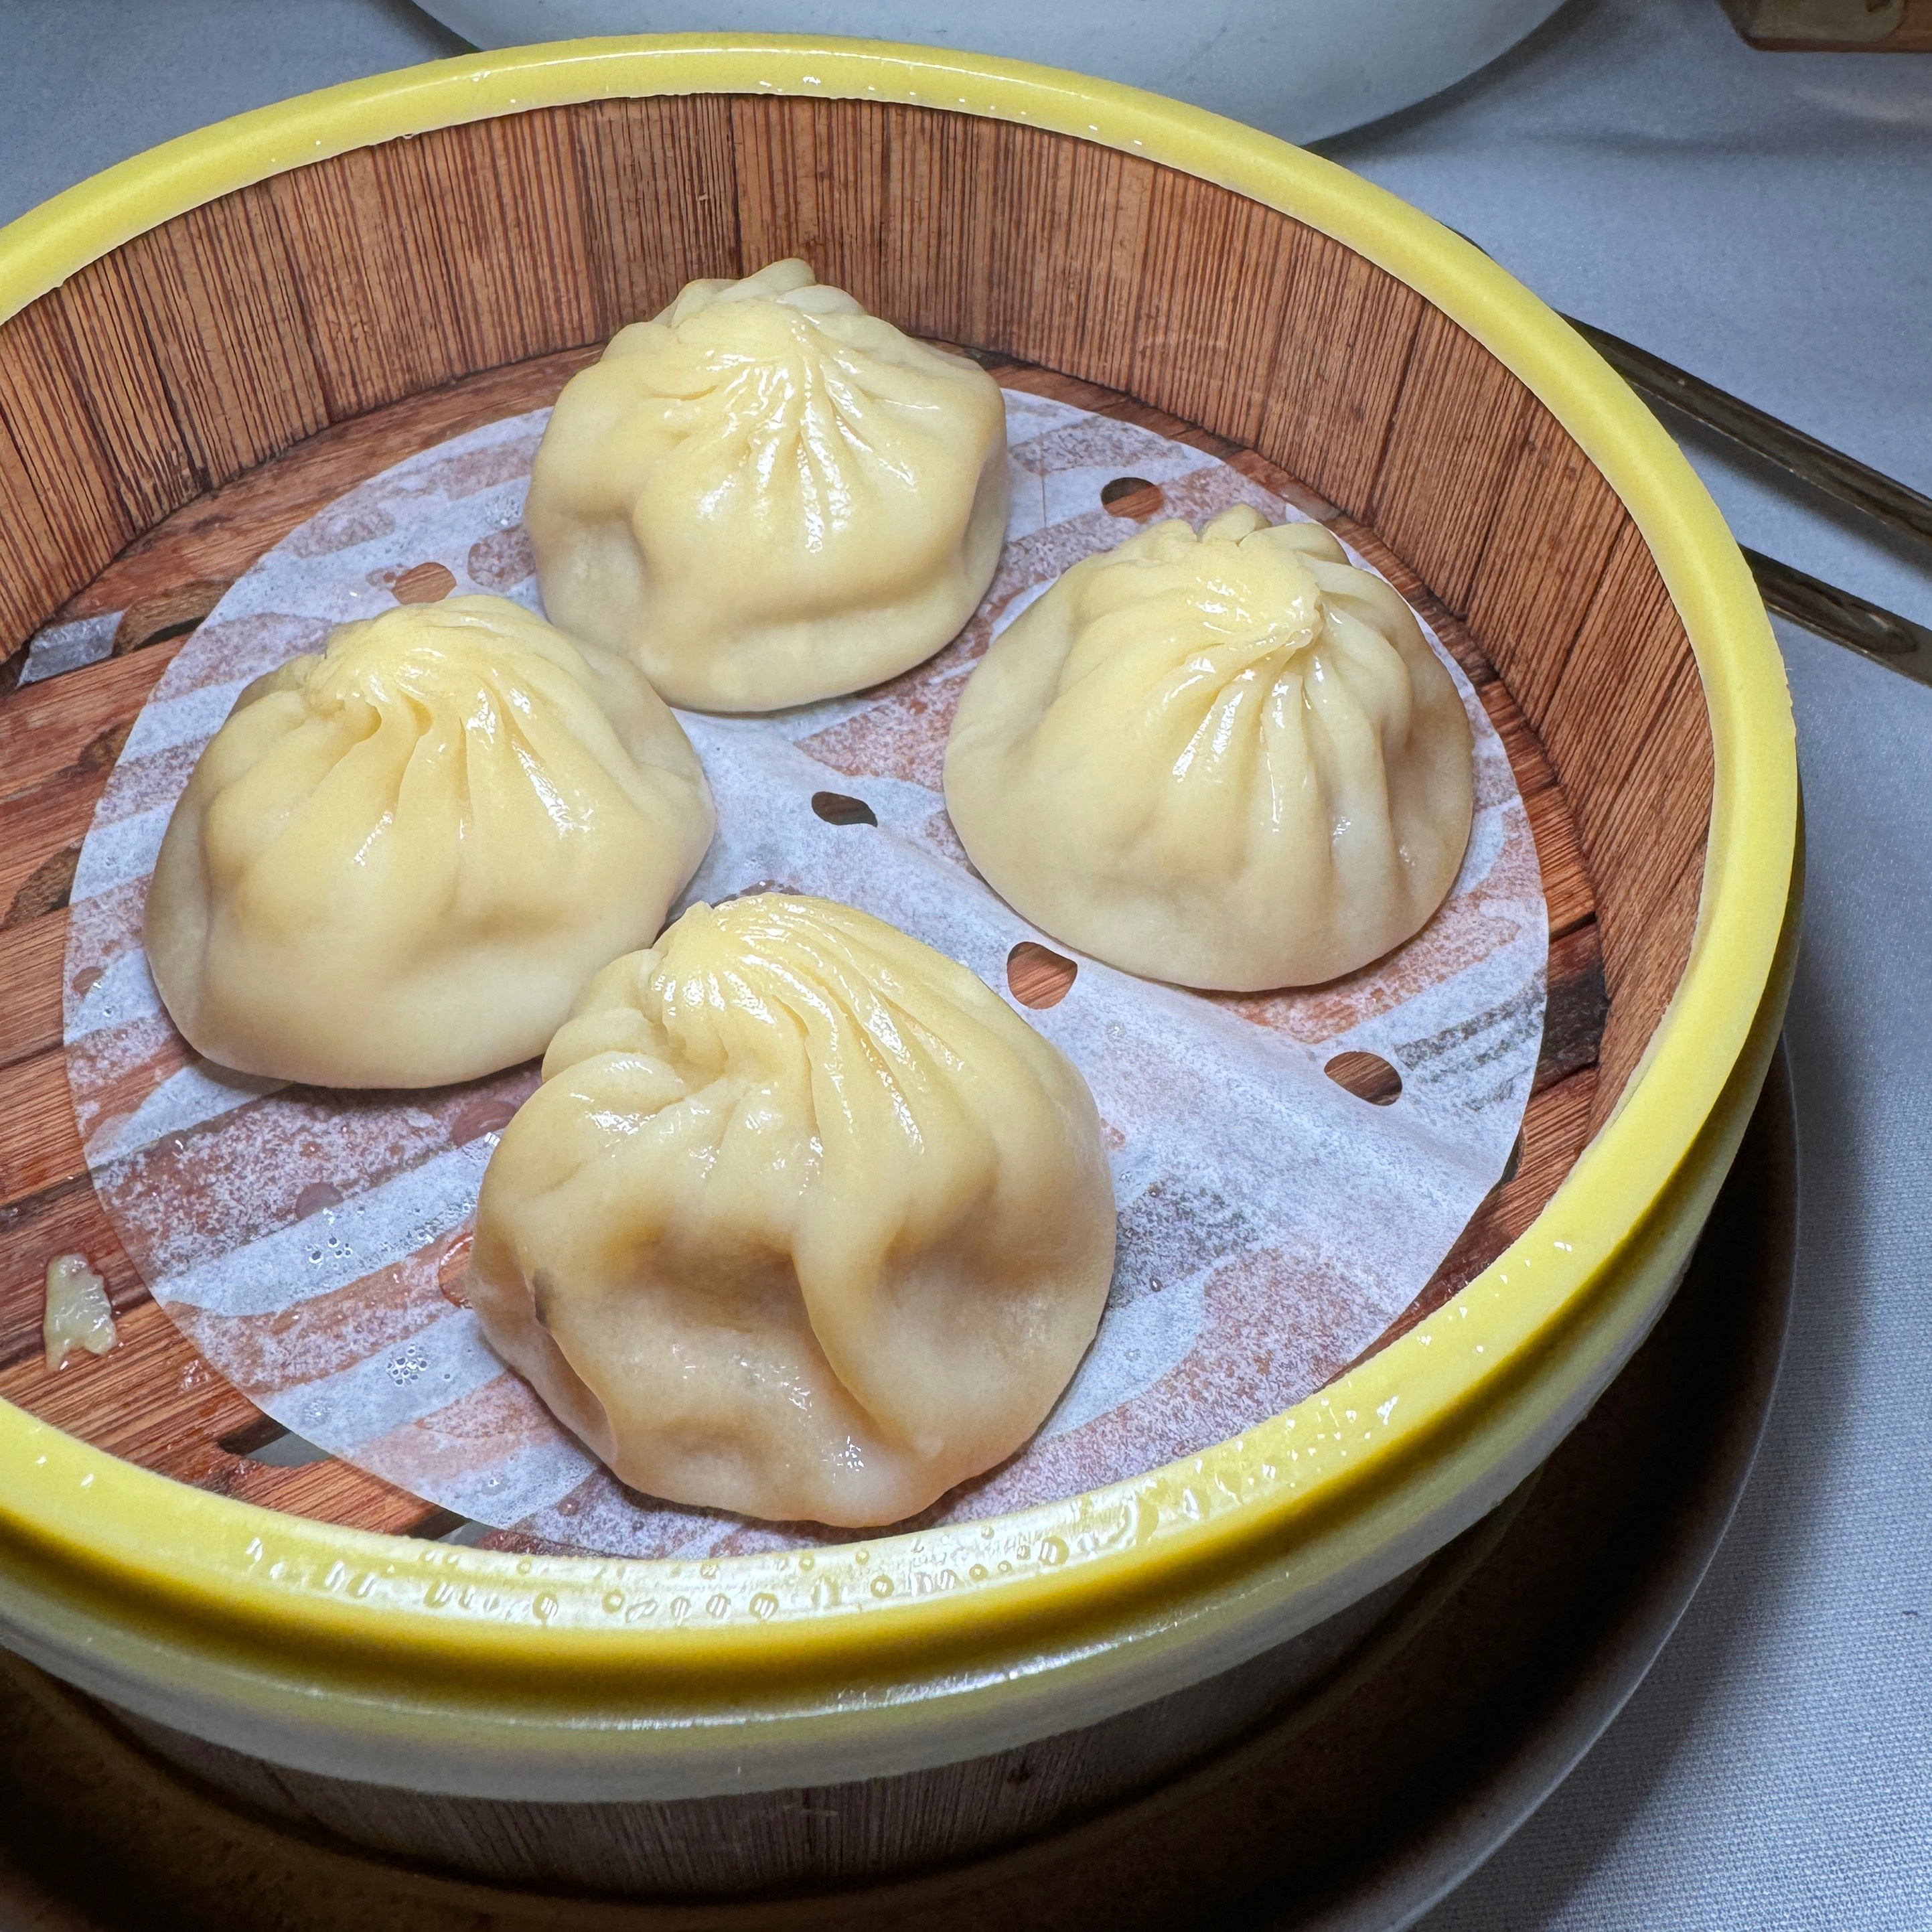 Steamed Pork & Crab Meat Soup Dumpling $10 from Jiang Nan 江南 on #foodmento http://foodmento.com/dish/57350